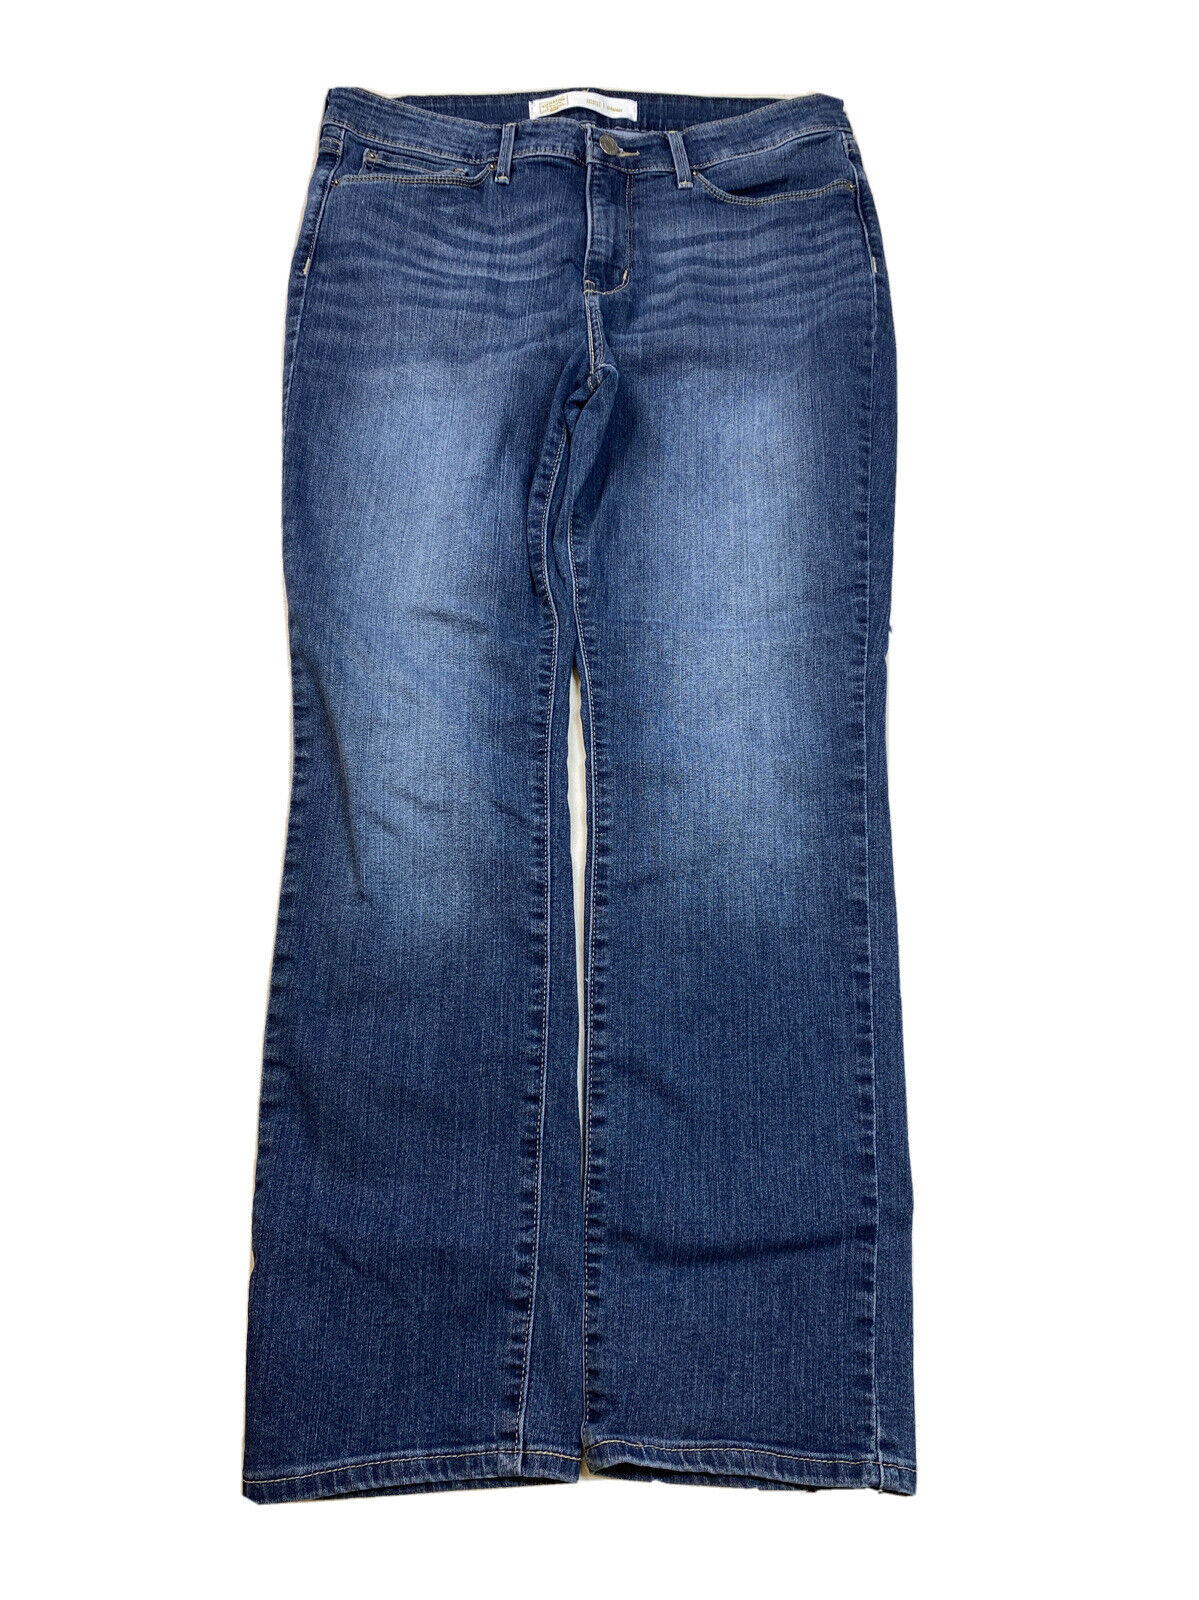 Levis Signature Women's Medium Wash Shaping Straight Jeans - 10 Short